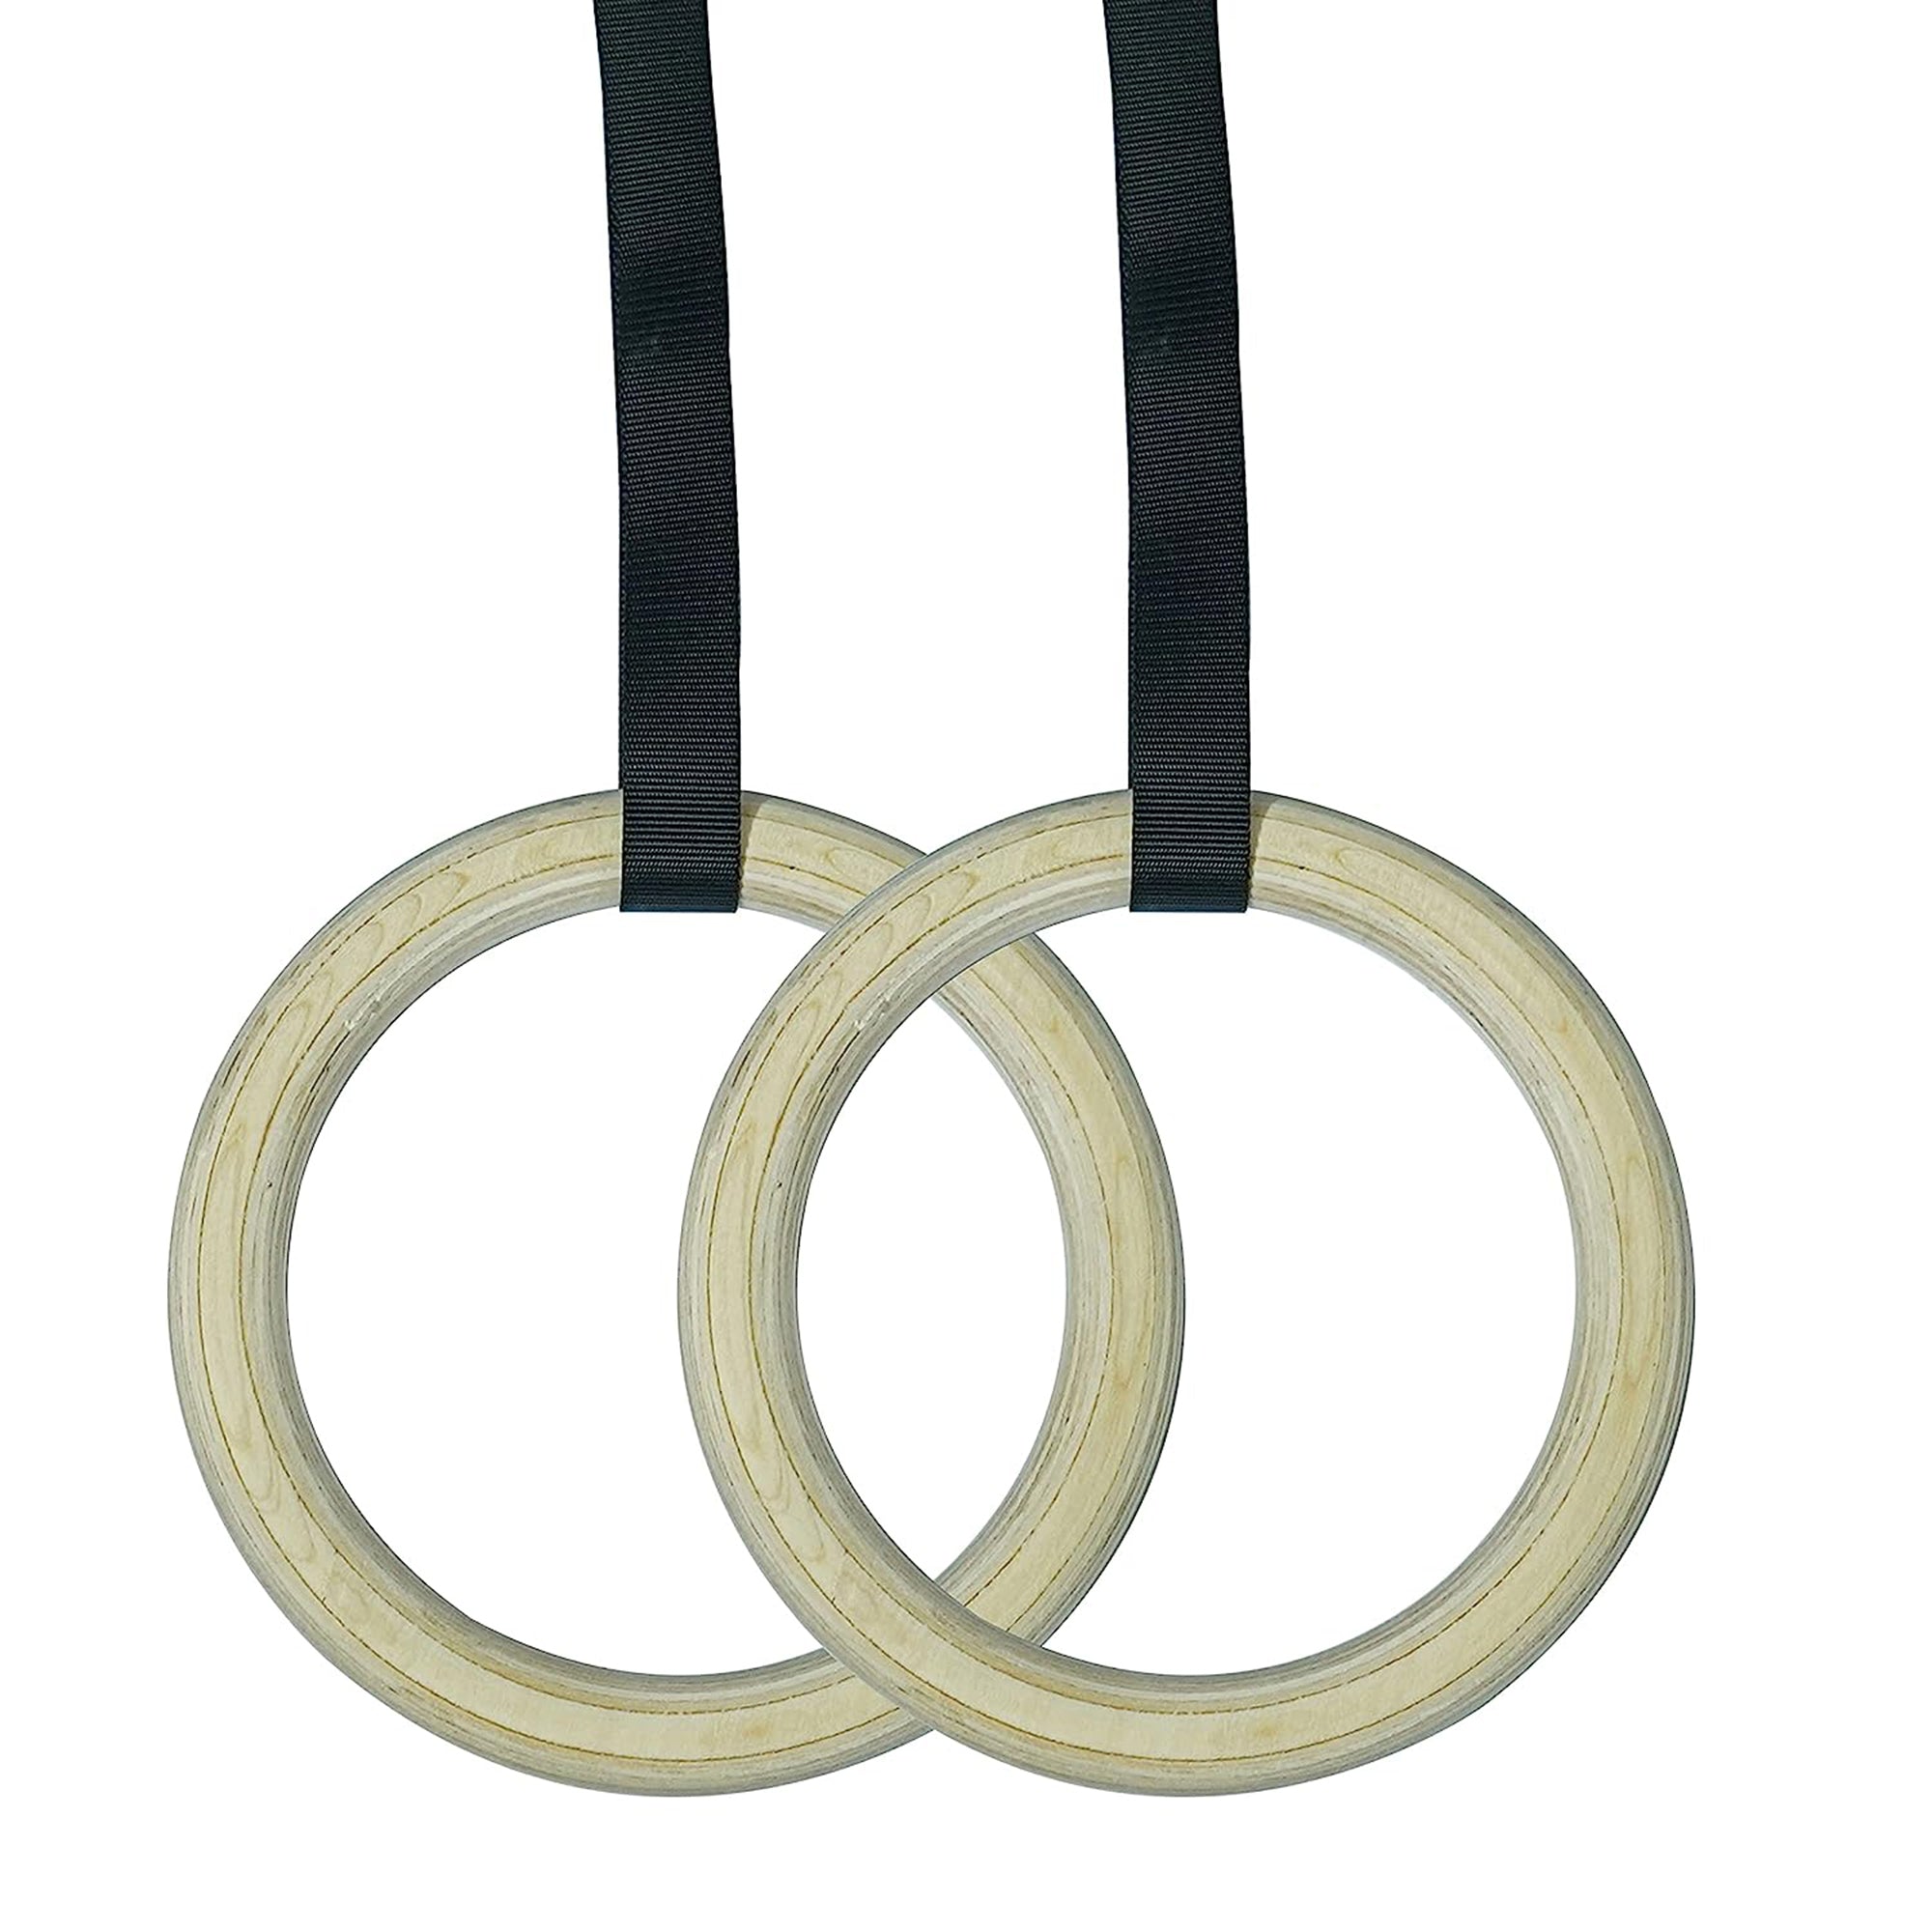 Manogyam Gymnastic Roman Rings - High Quality & Affordable ( Wood )